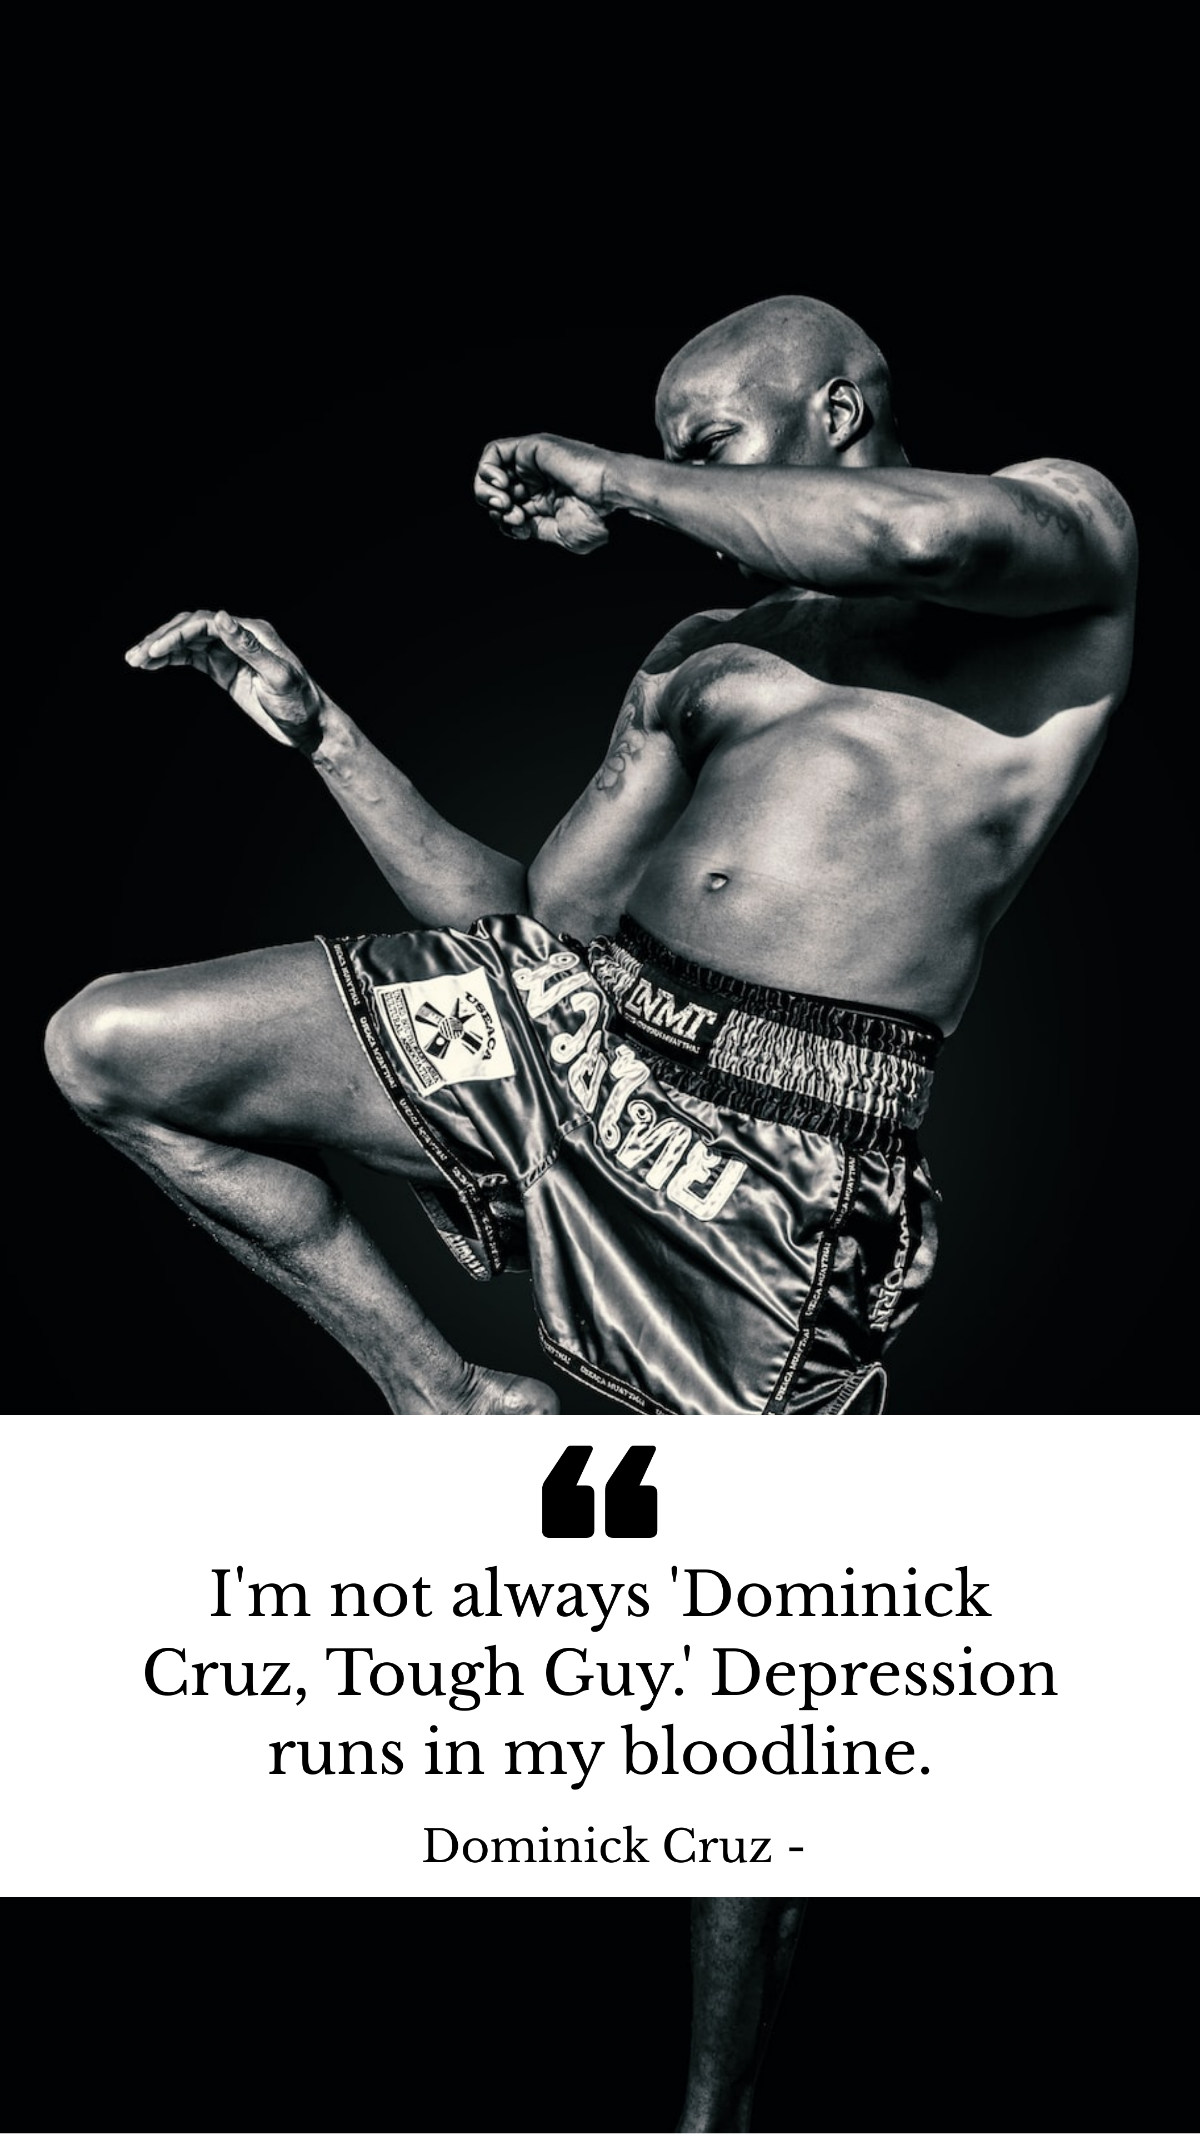 Dominick Cruz - I'm not always 'Dominick Cruz, Tough Guy.' Depression runs in my bloodline. Template